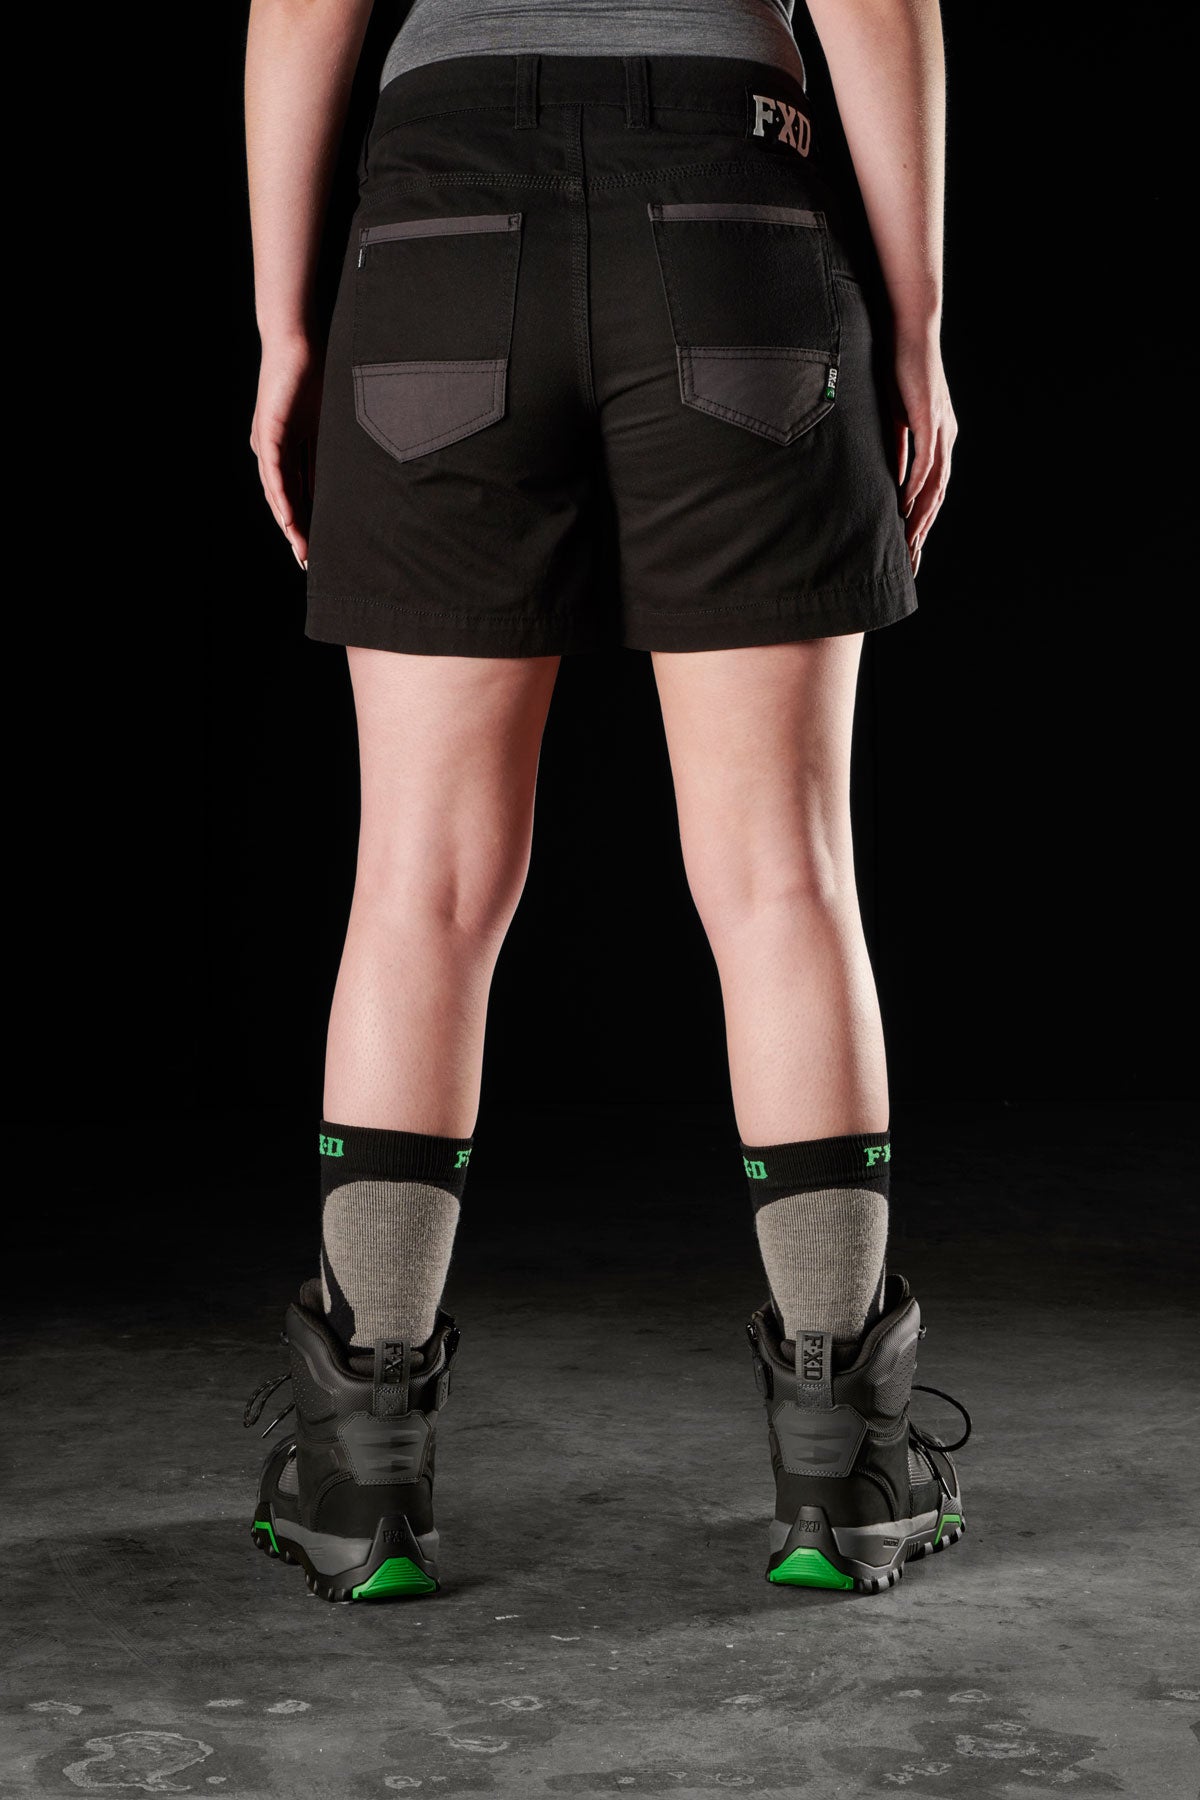 FXD - WS-2W Women's Short Work Shorts - Khaki